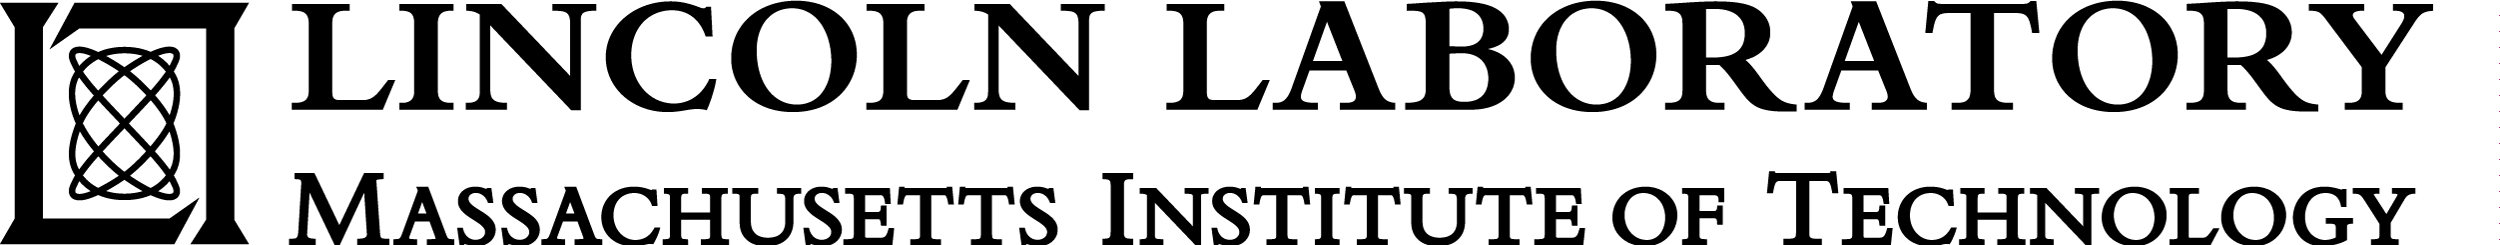 MIT Lincoln Laboratory Full Logo in Black